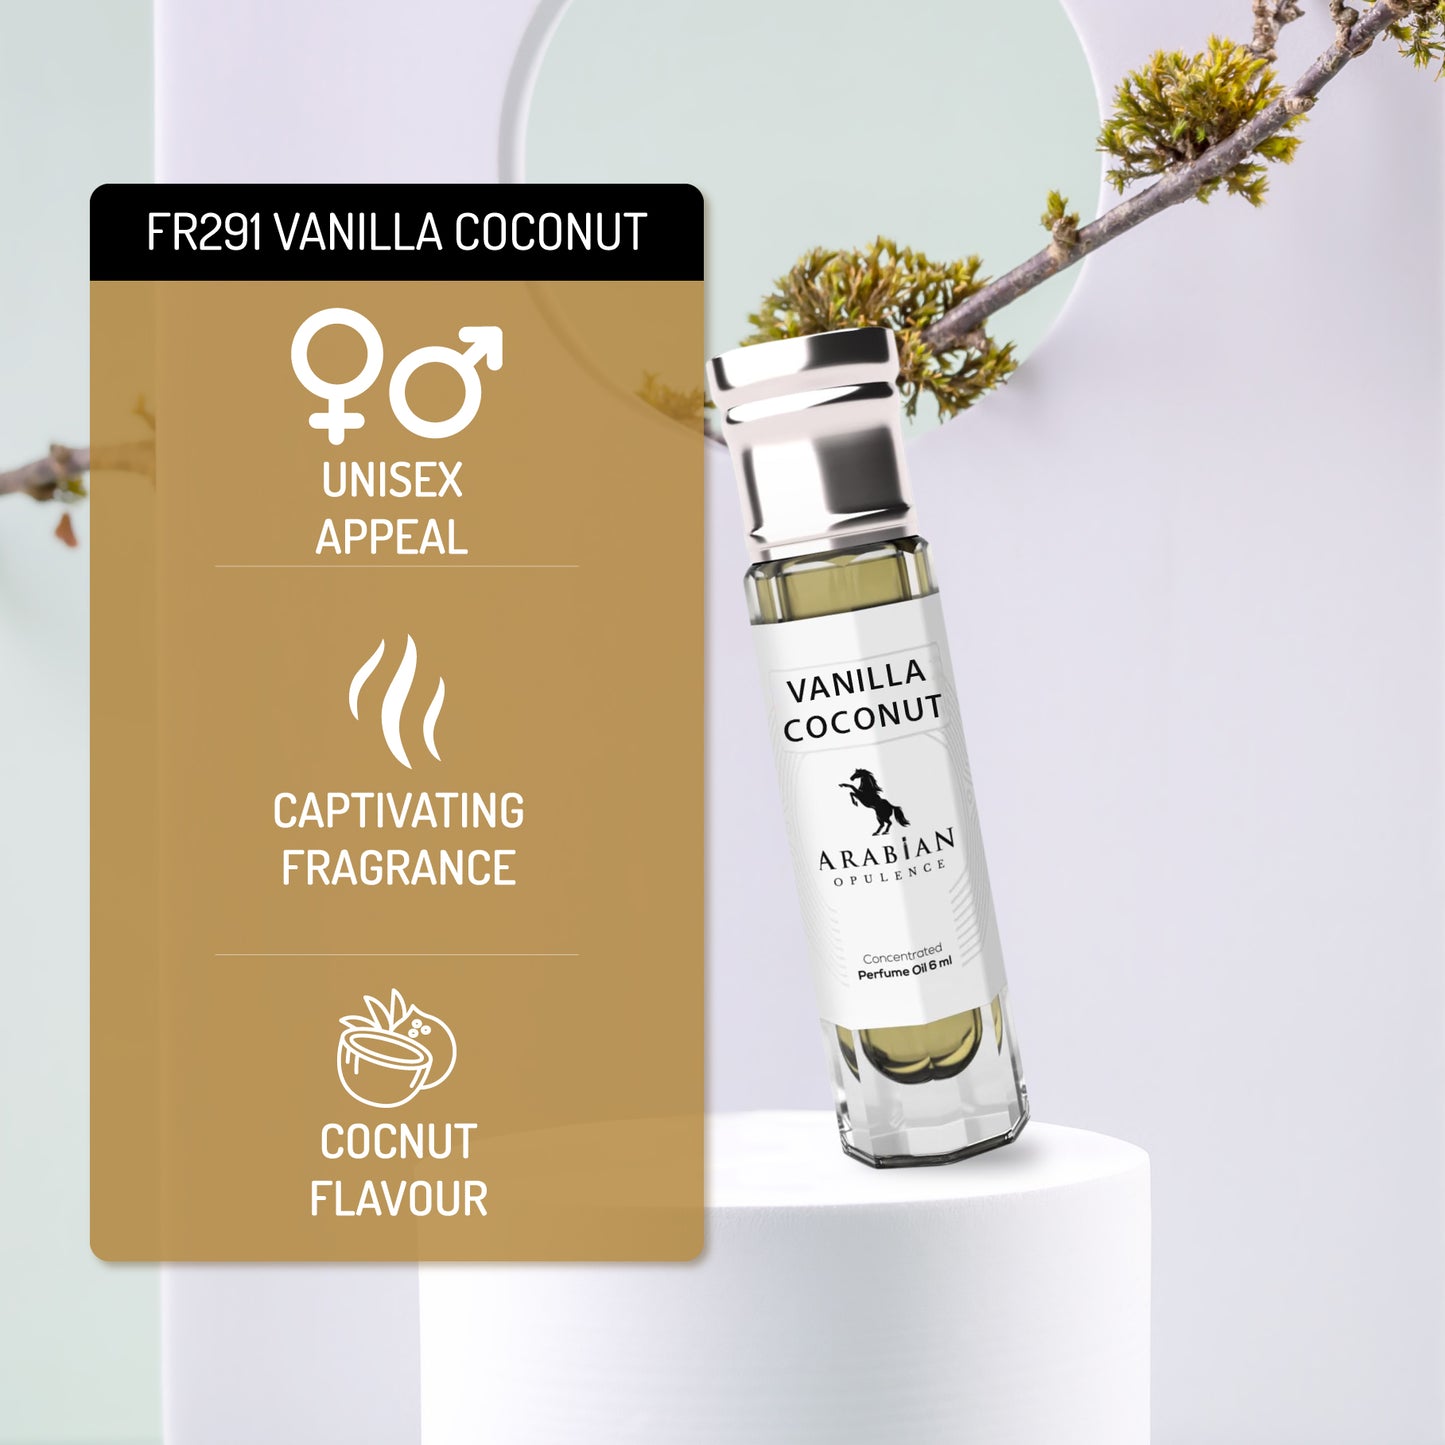 FR291 VANILLA COCONUT - Perfume Body Oil - Alcohol Free